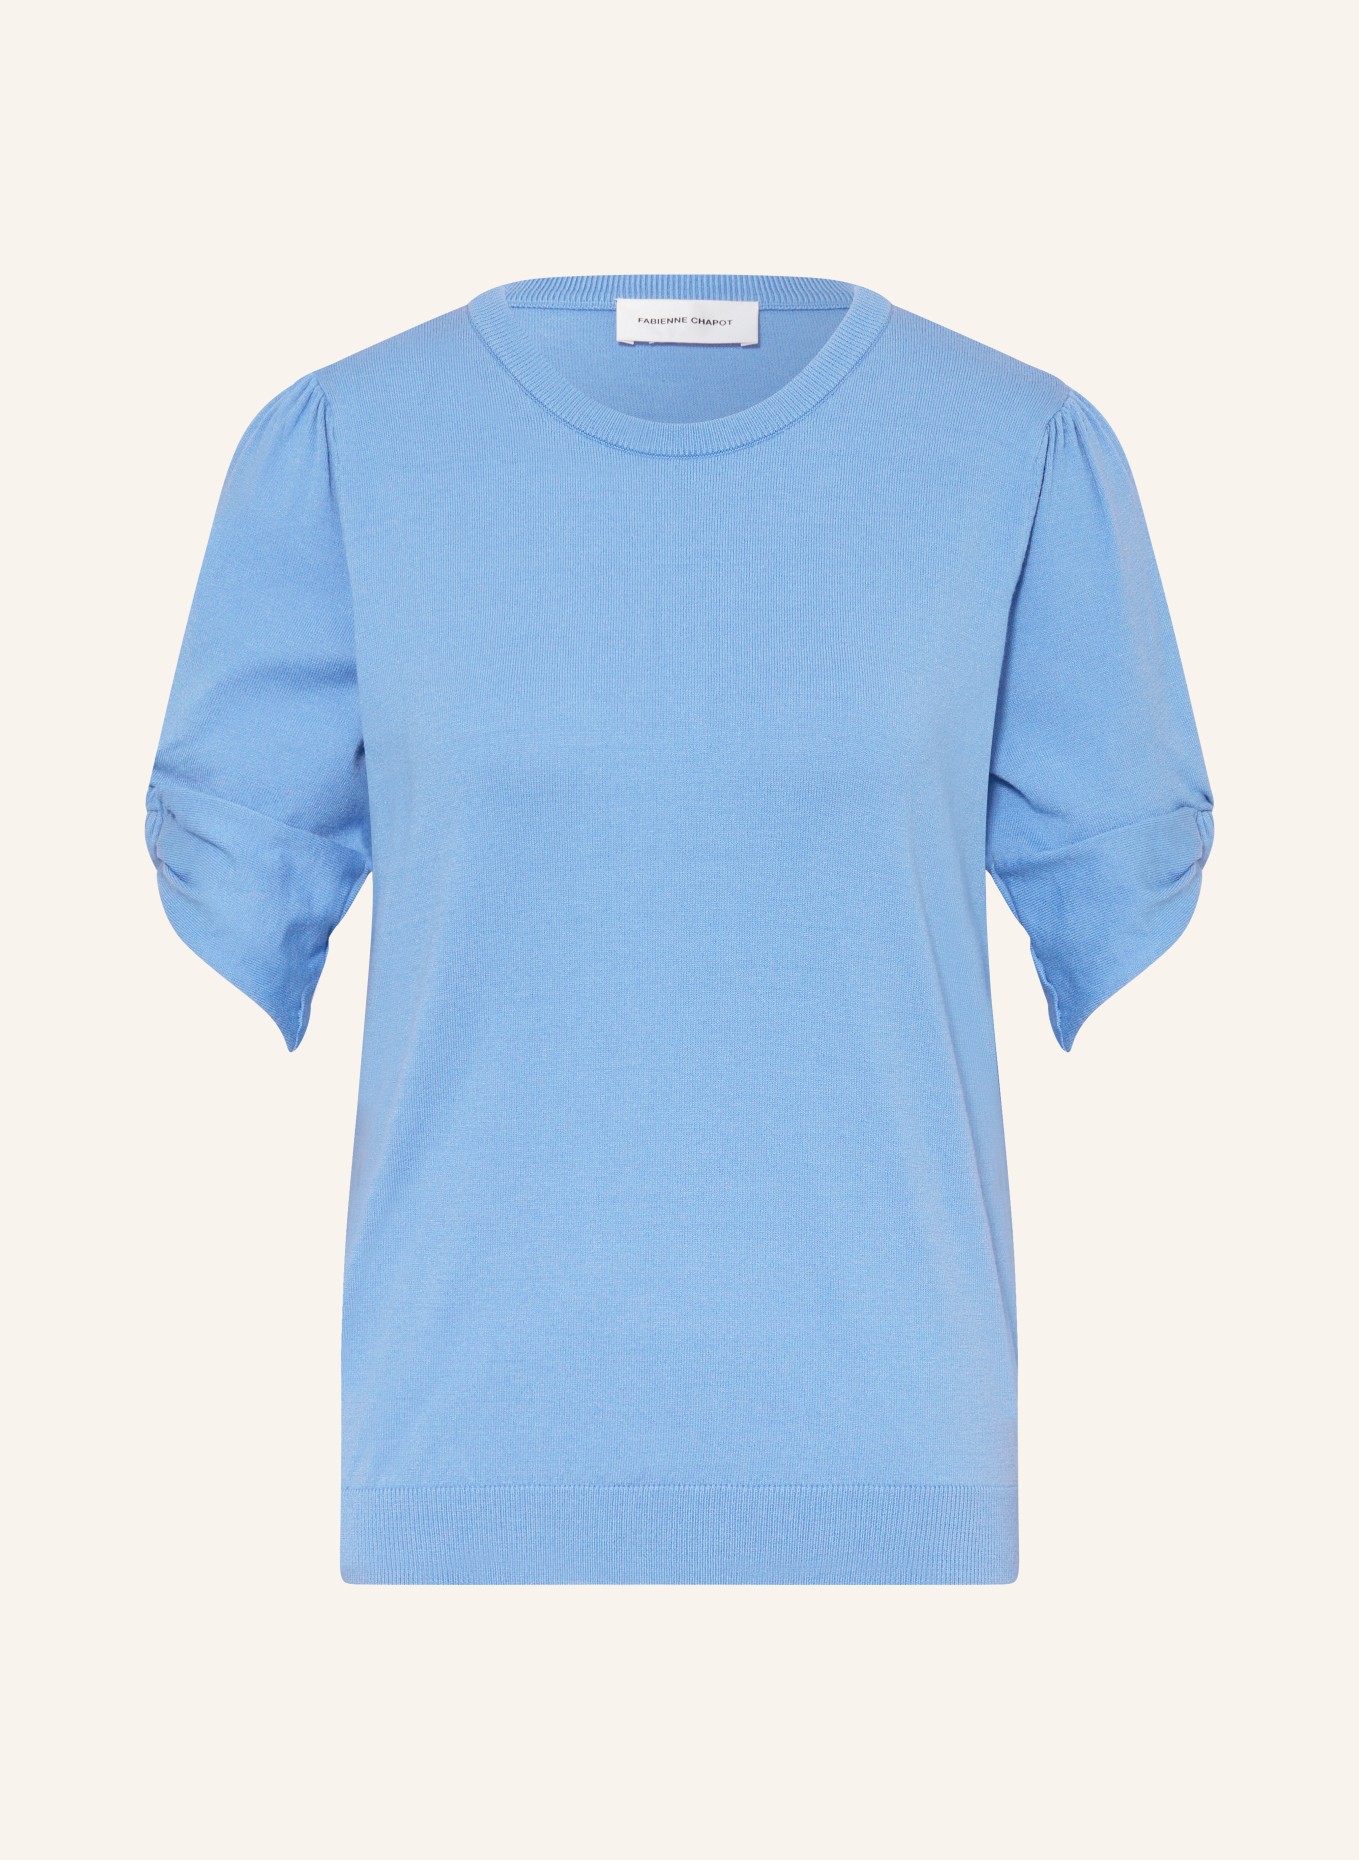 FABIENNE CHAPOT Strickshirt MOLLY, Farbe: BLAU (Bild 1)